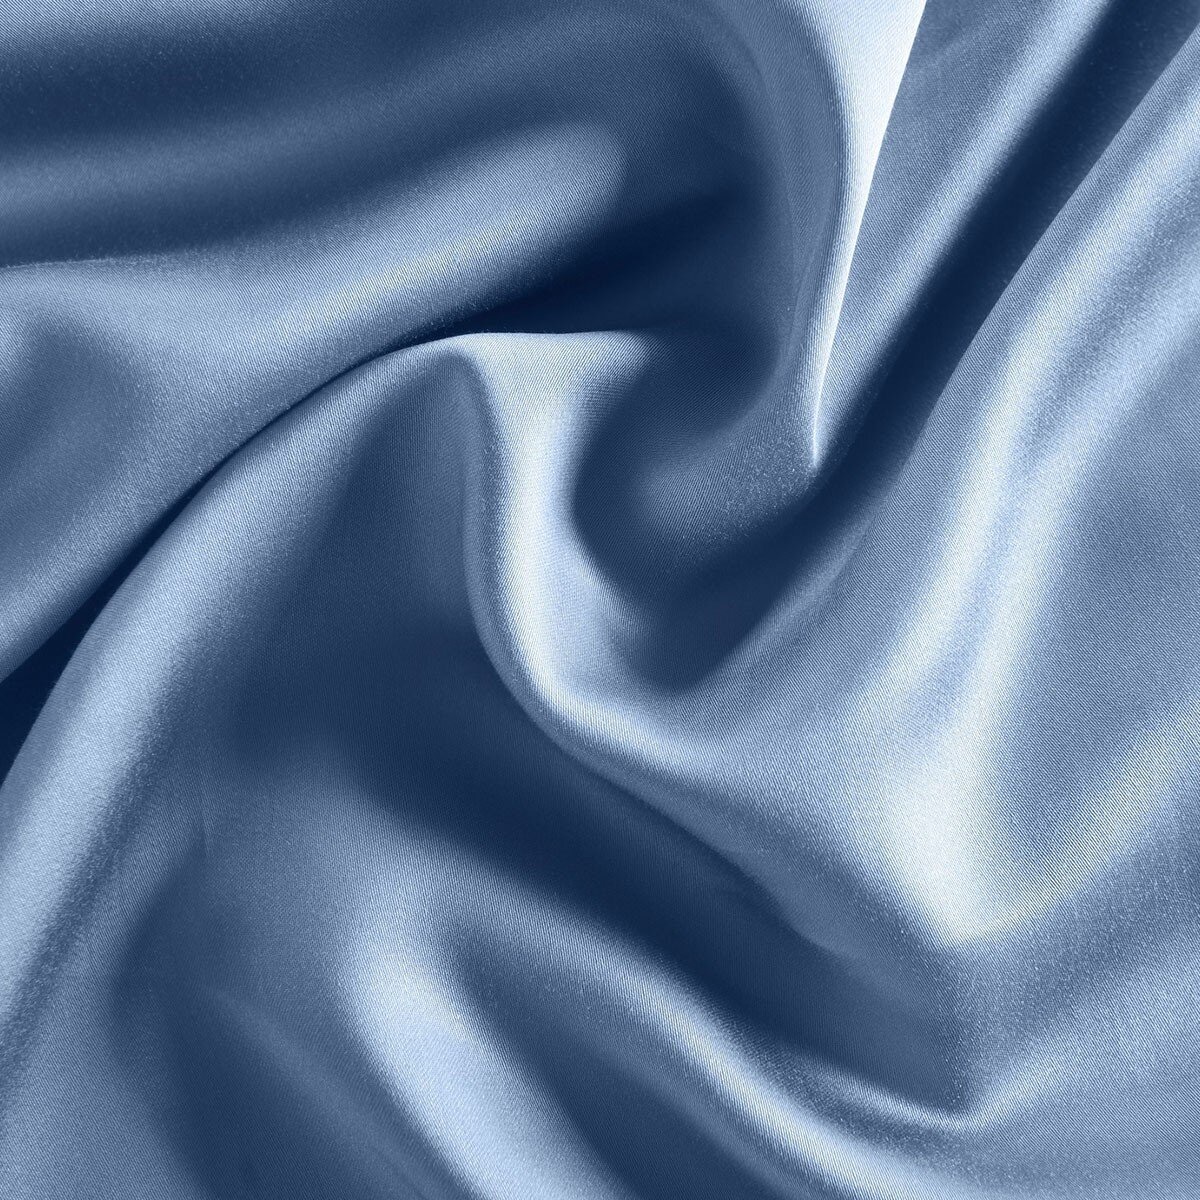 Don Home 萊賽爾素色雙人特大床包枕套三件組 182公分 X 212公分 海藍